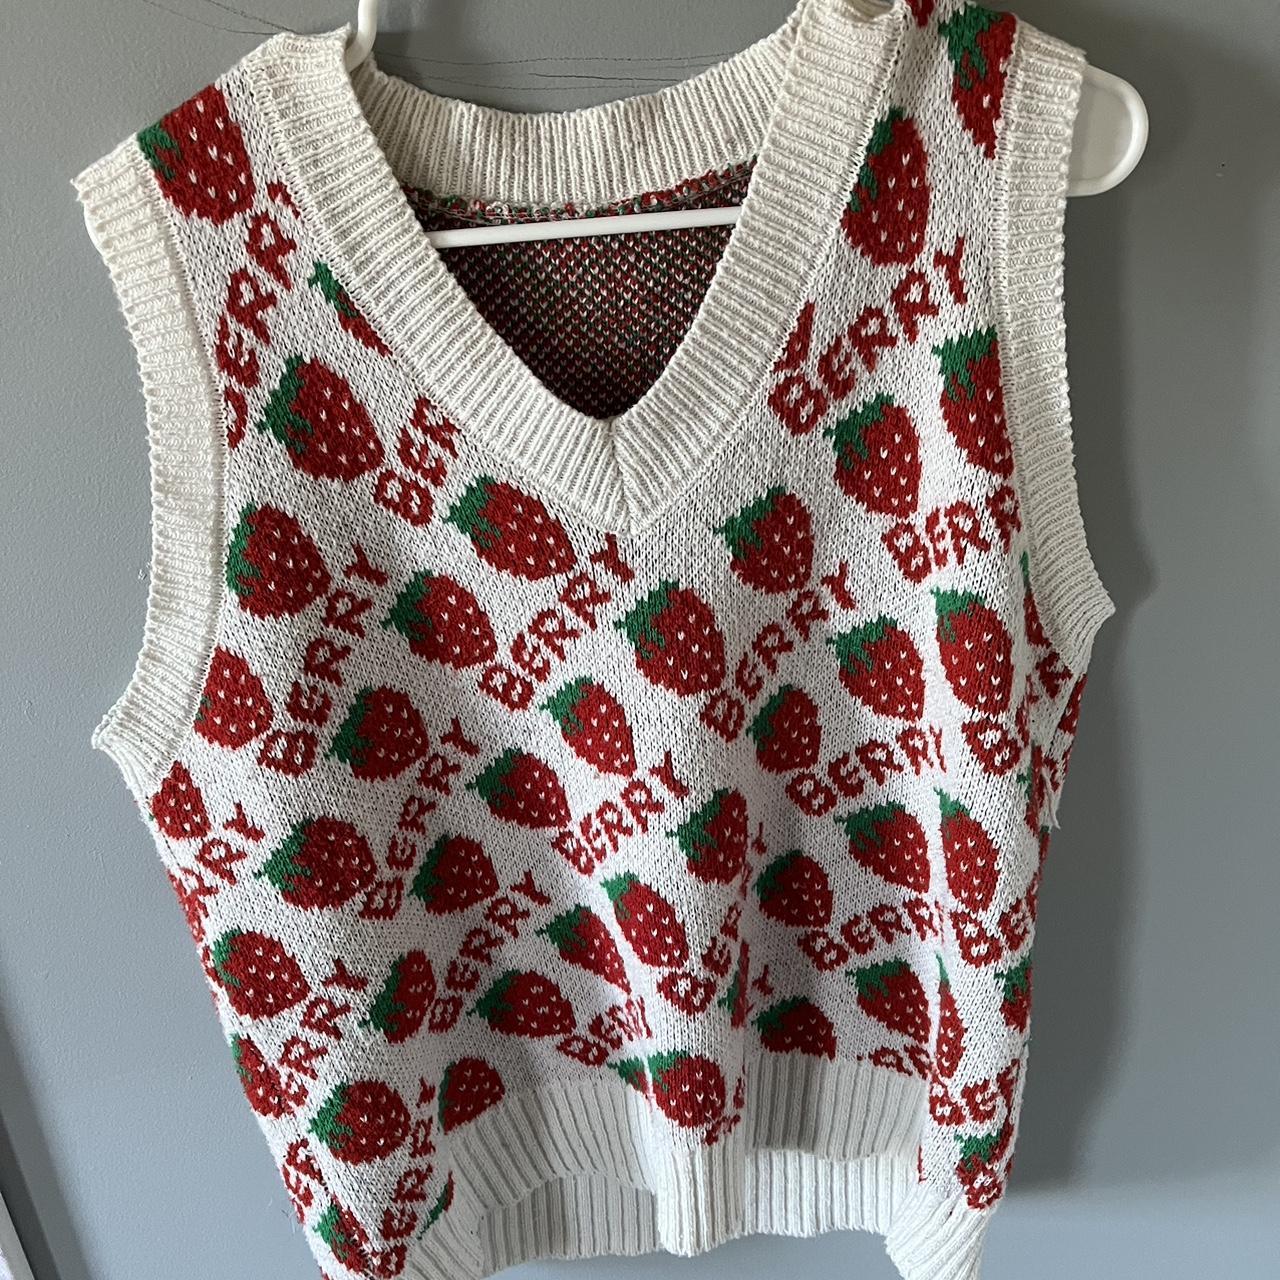 Strawberry sweater-vest - Depop